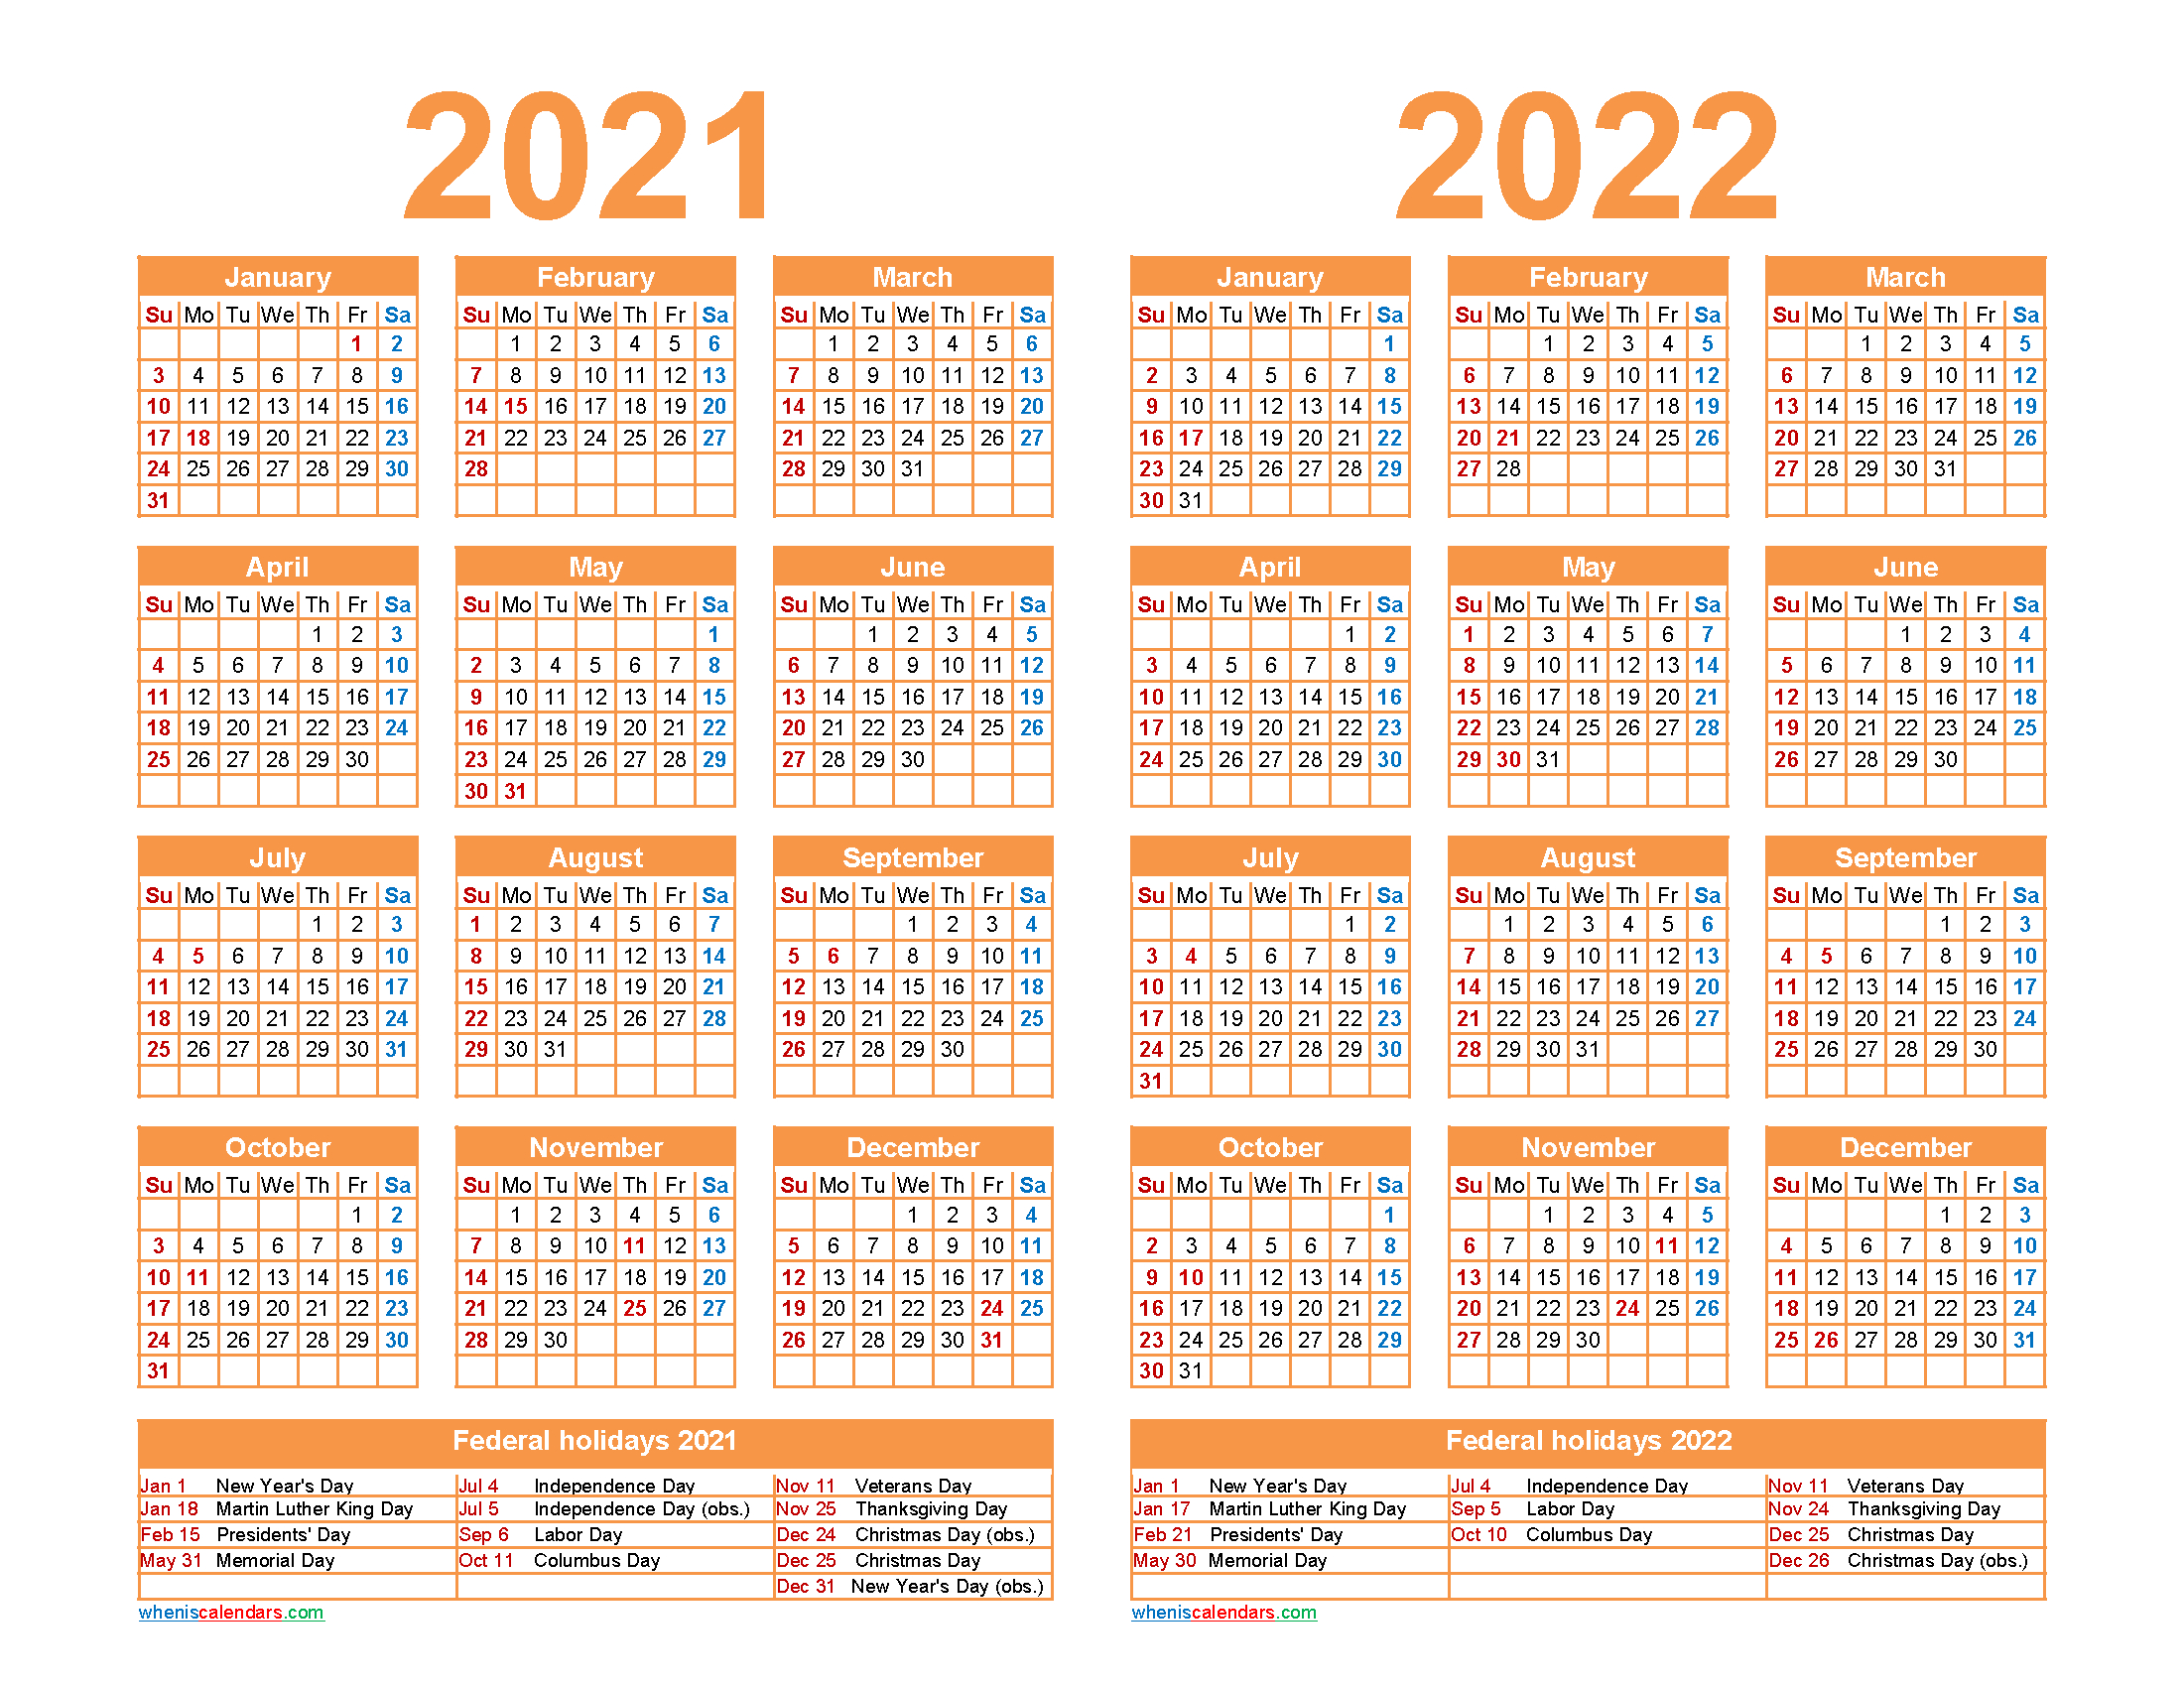 Free 2021 And 2022 Calendar Printable With Holidays-2022 Calendar With Holidays Printable